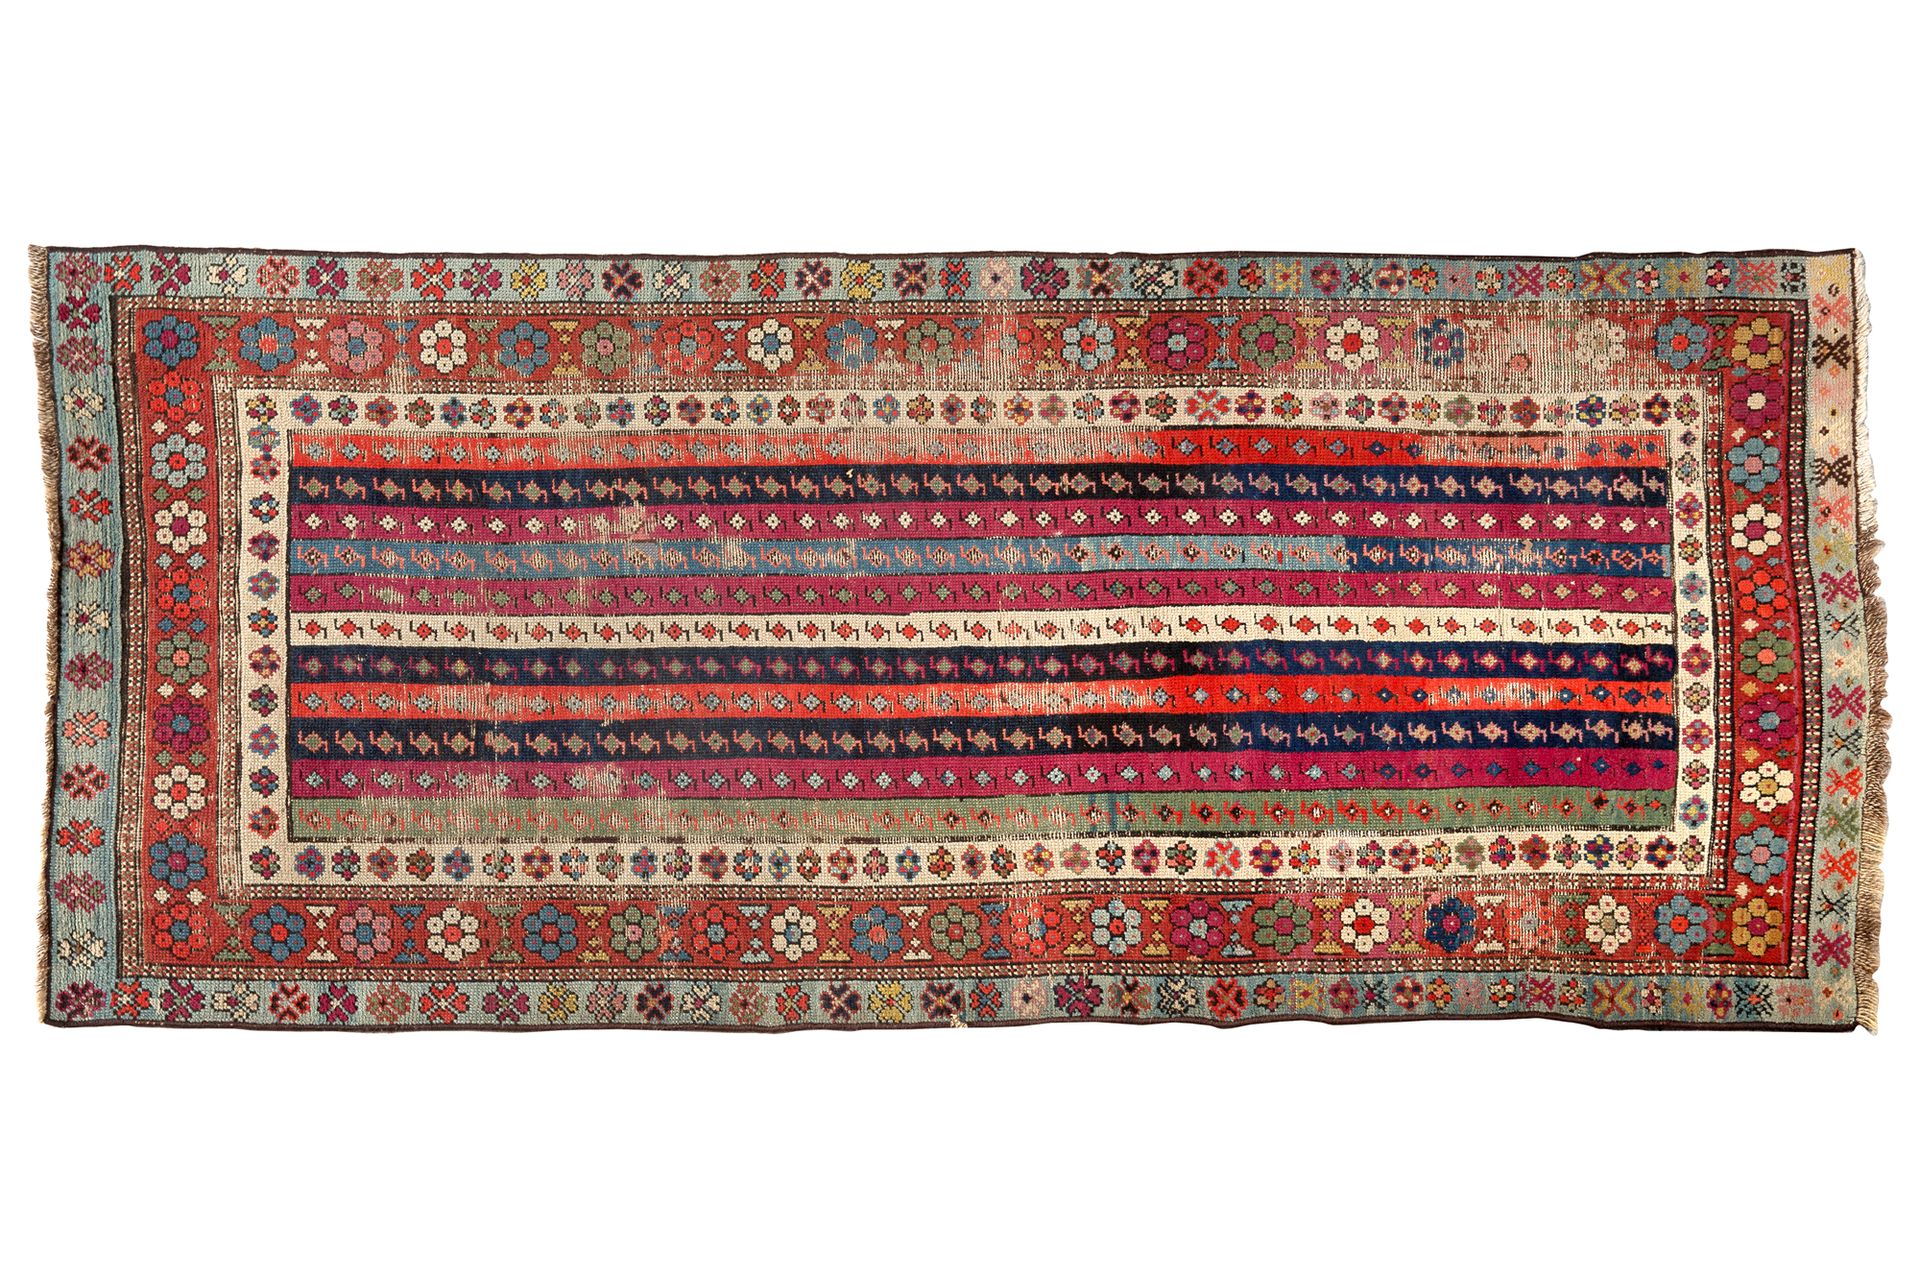 Null [RUGS]
Talich (Caucasus) circa 1870/1880 Wool velvet on wool foundation. We&hellip;